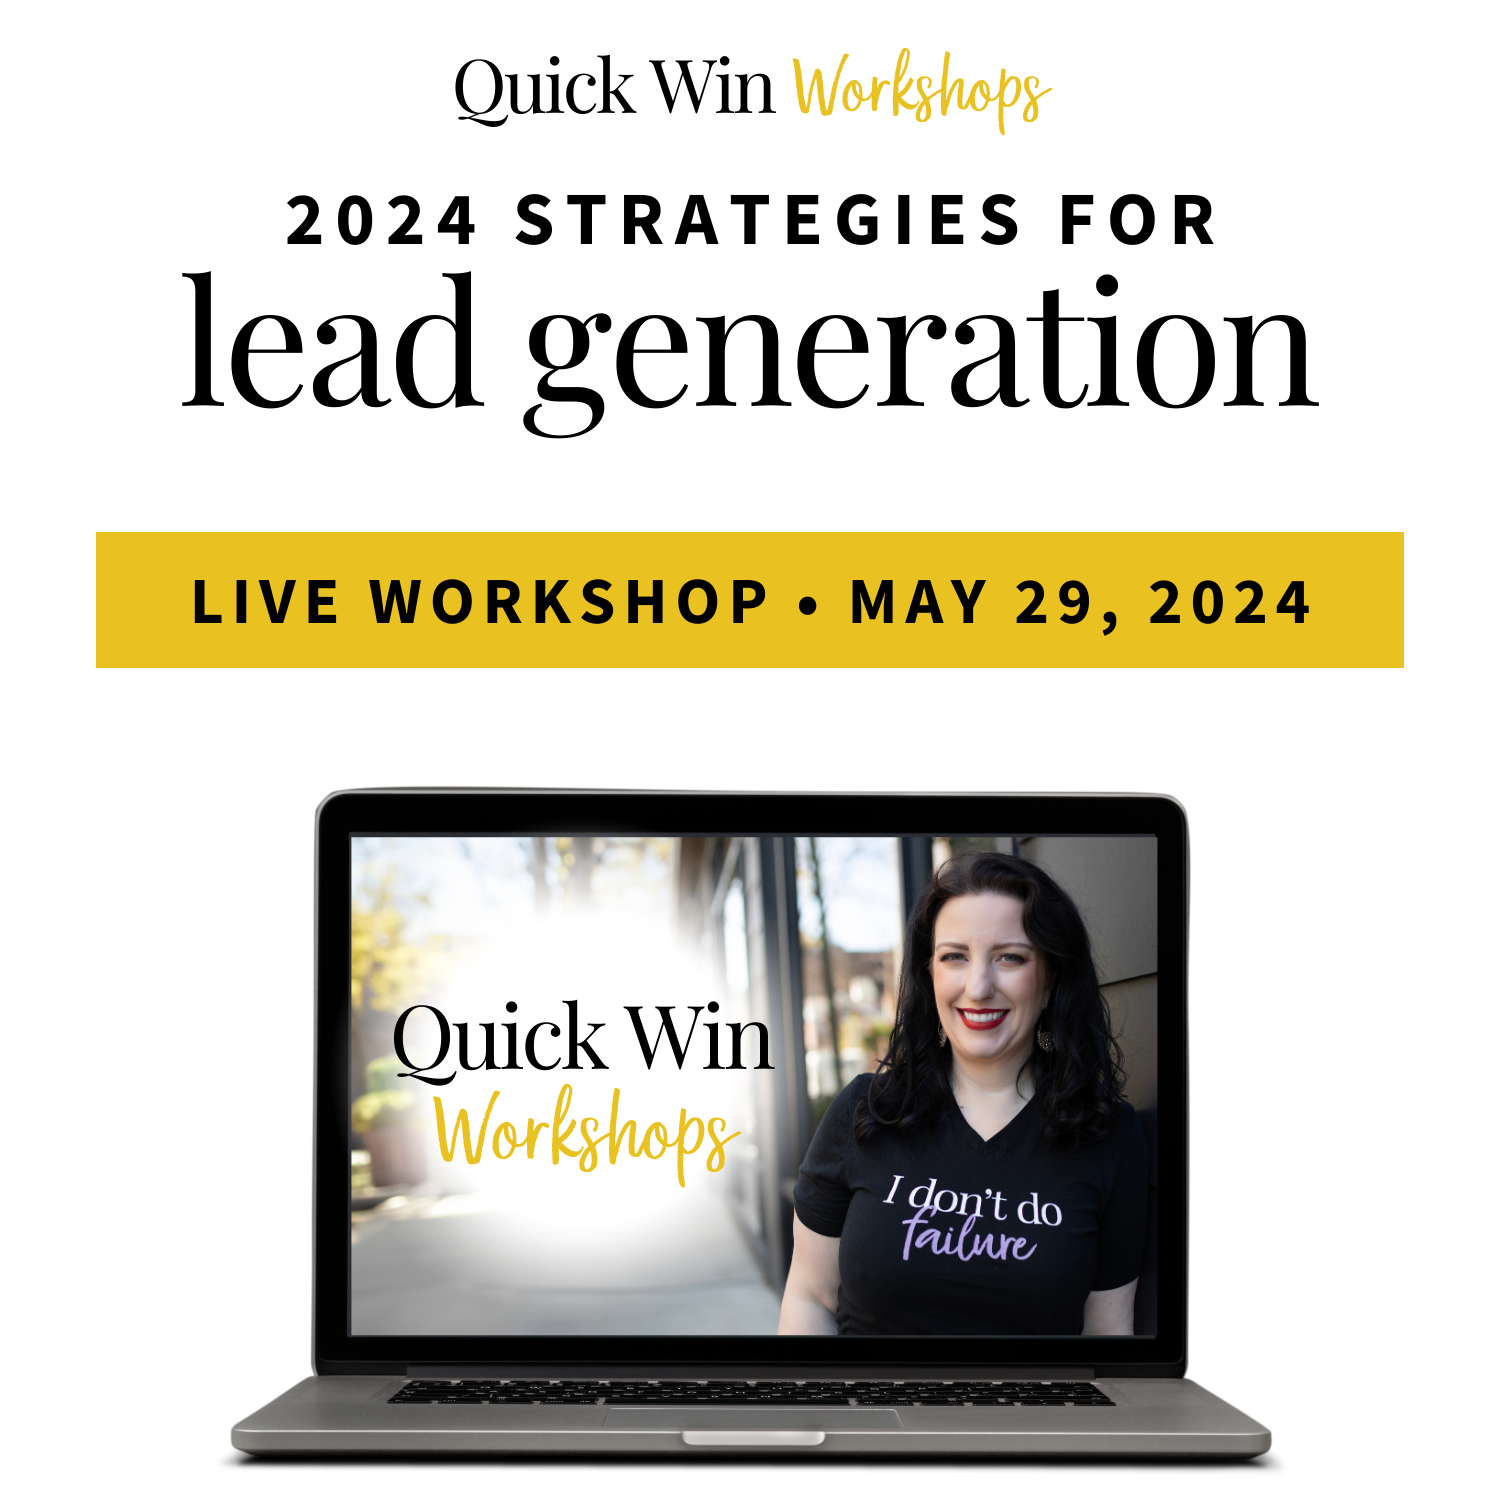 Quick Win Workshop: Fresh Lead Generation Strategies to Fuel 2024 Growth